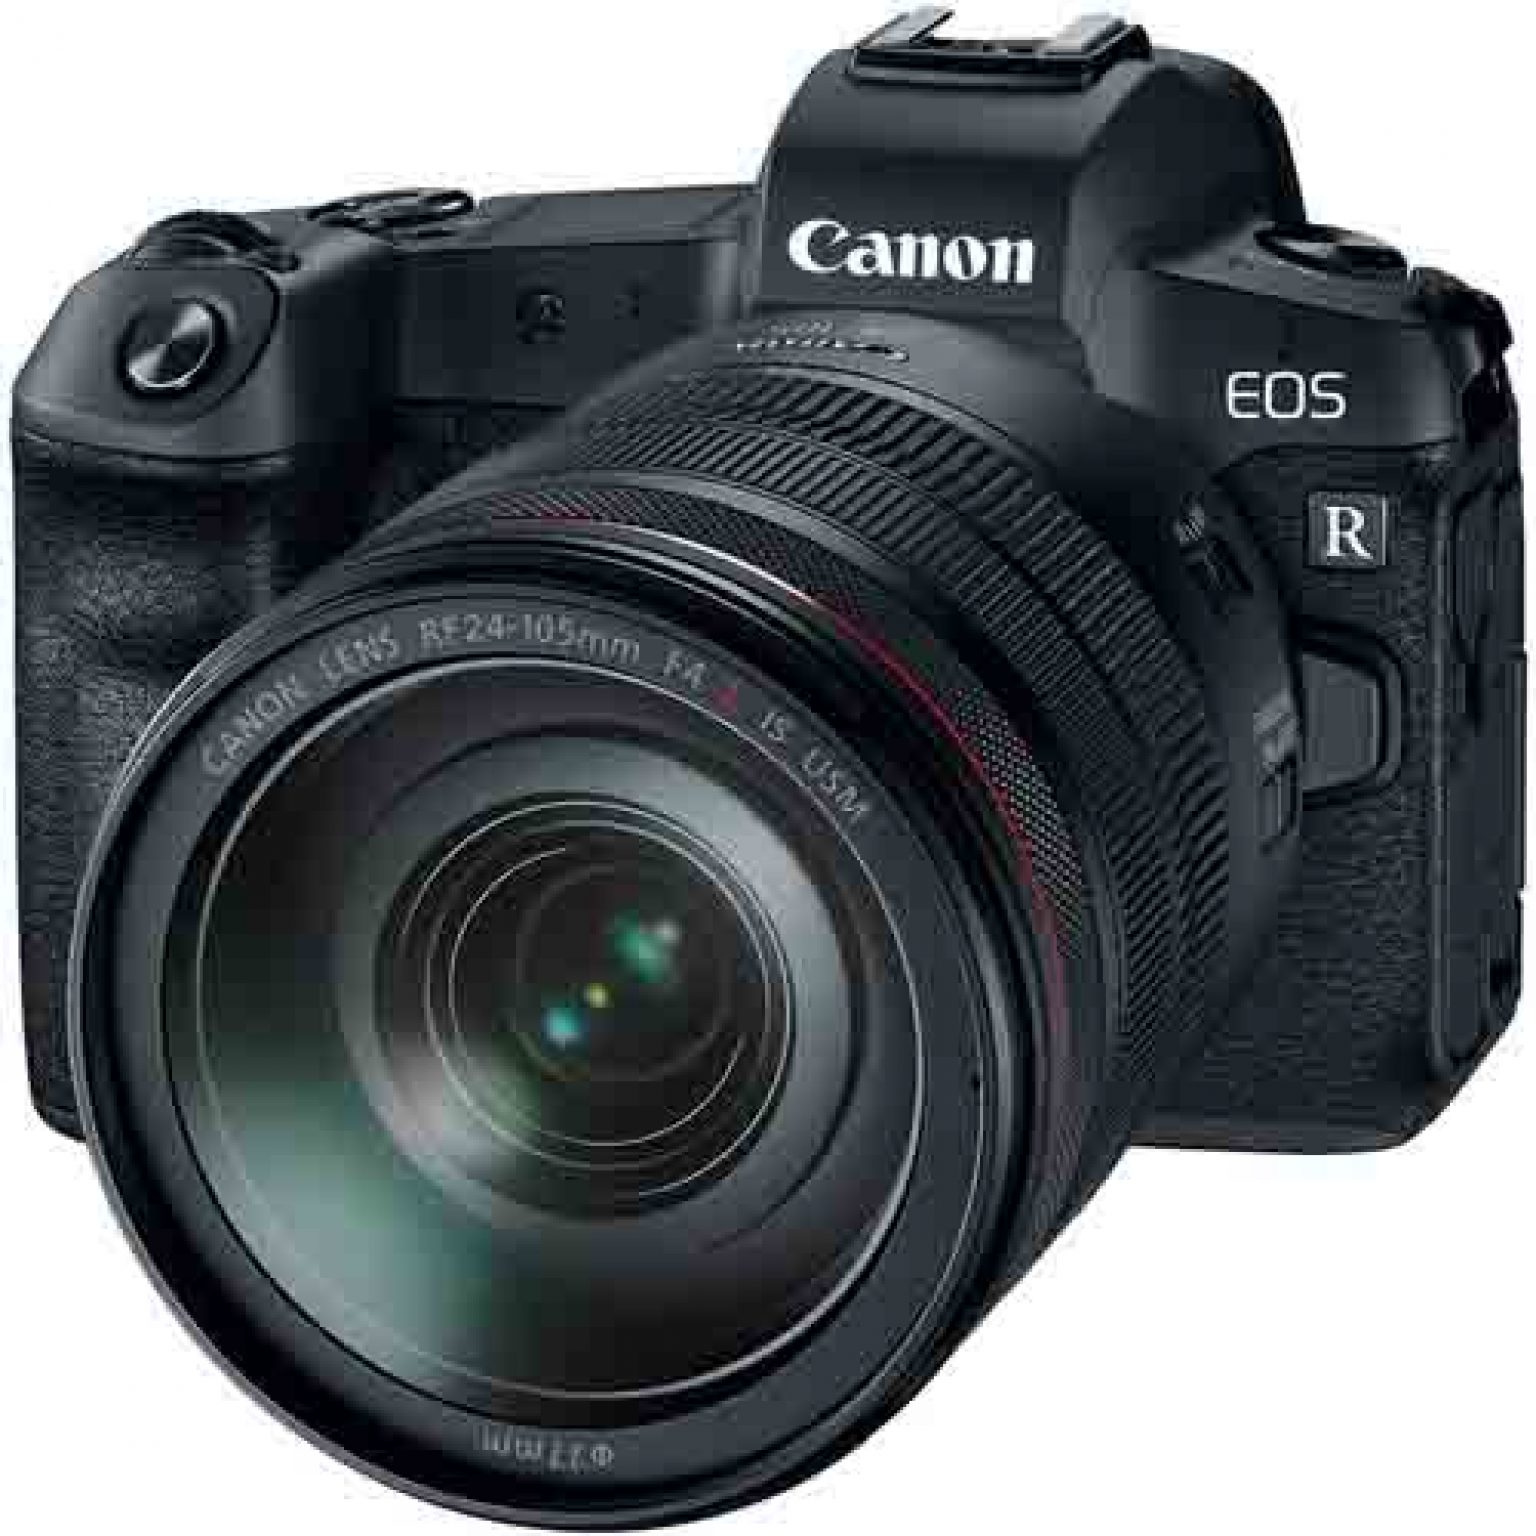 Canon EOS R Mirrorless Price in Pakistan Compare Online Compareprice.pk